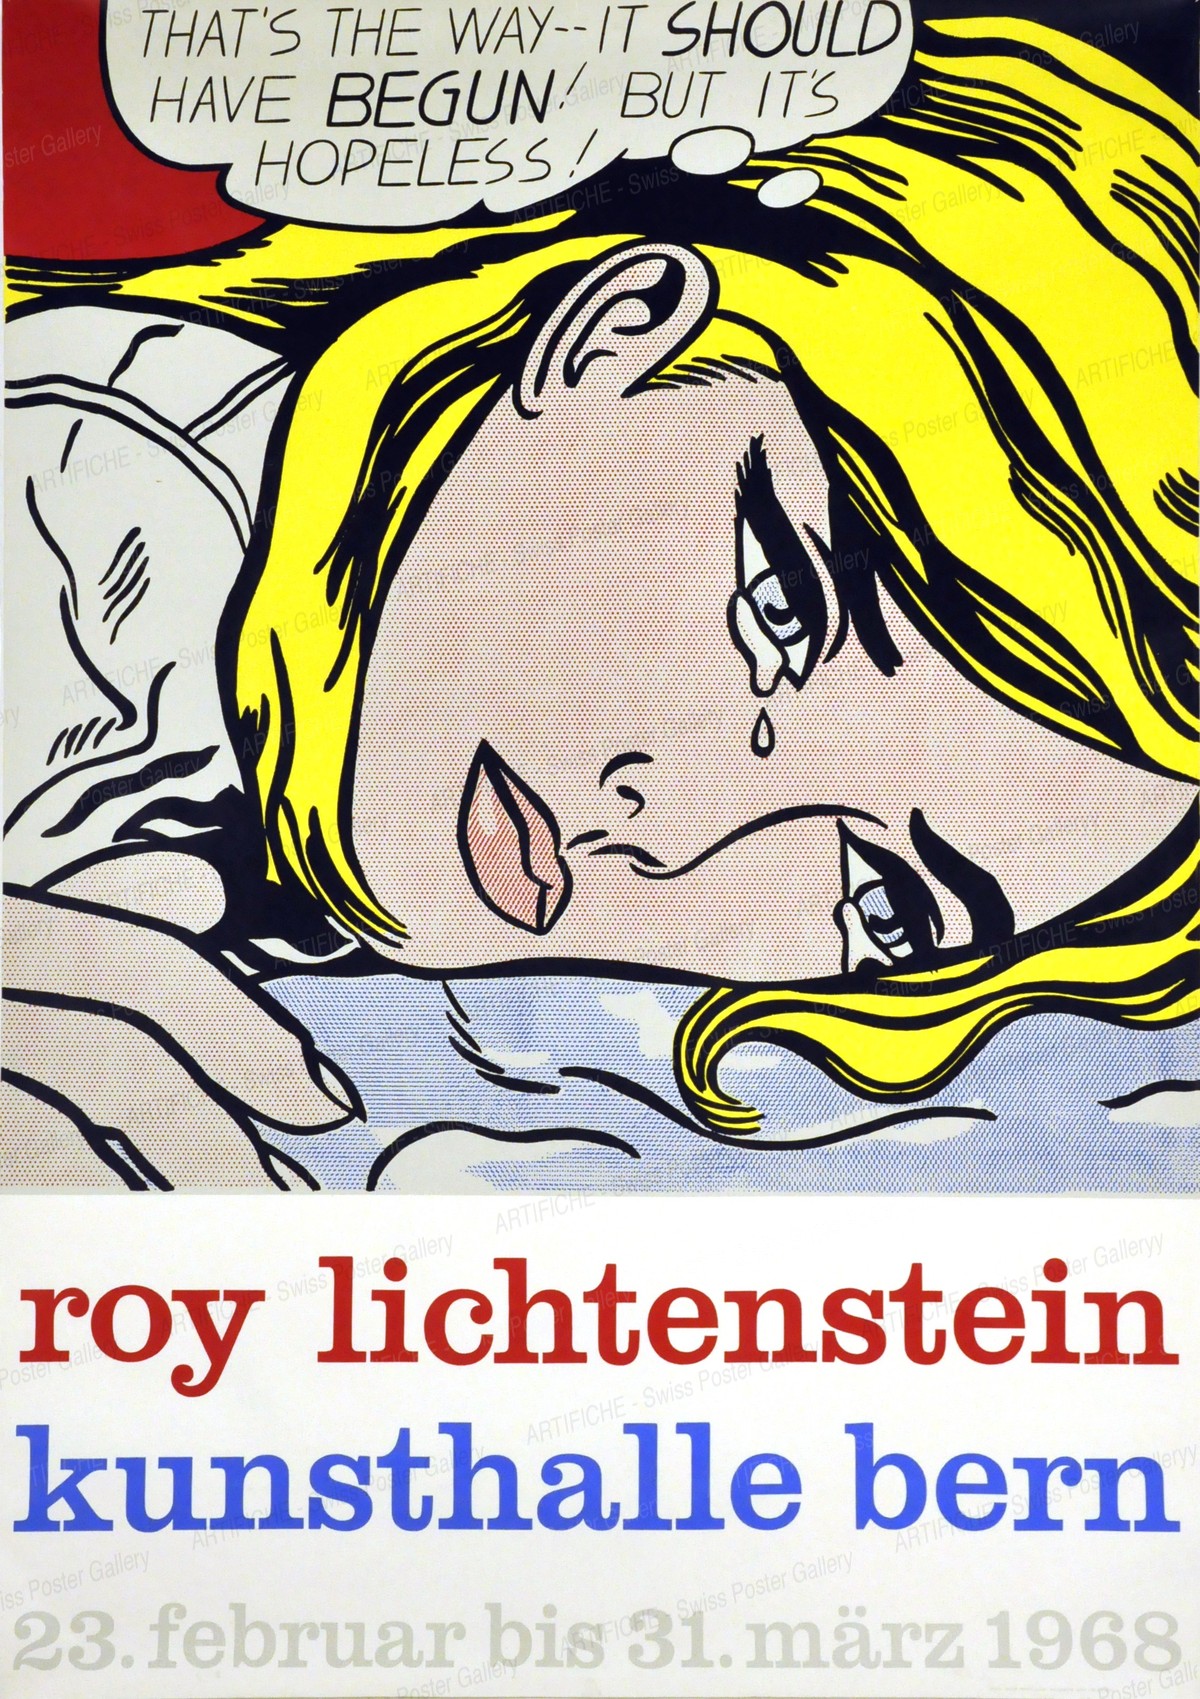 Kunsthalle Bern: That’s the way – It should have begun! But it’s hopeless!, Roy Lichtenstein